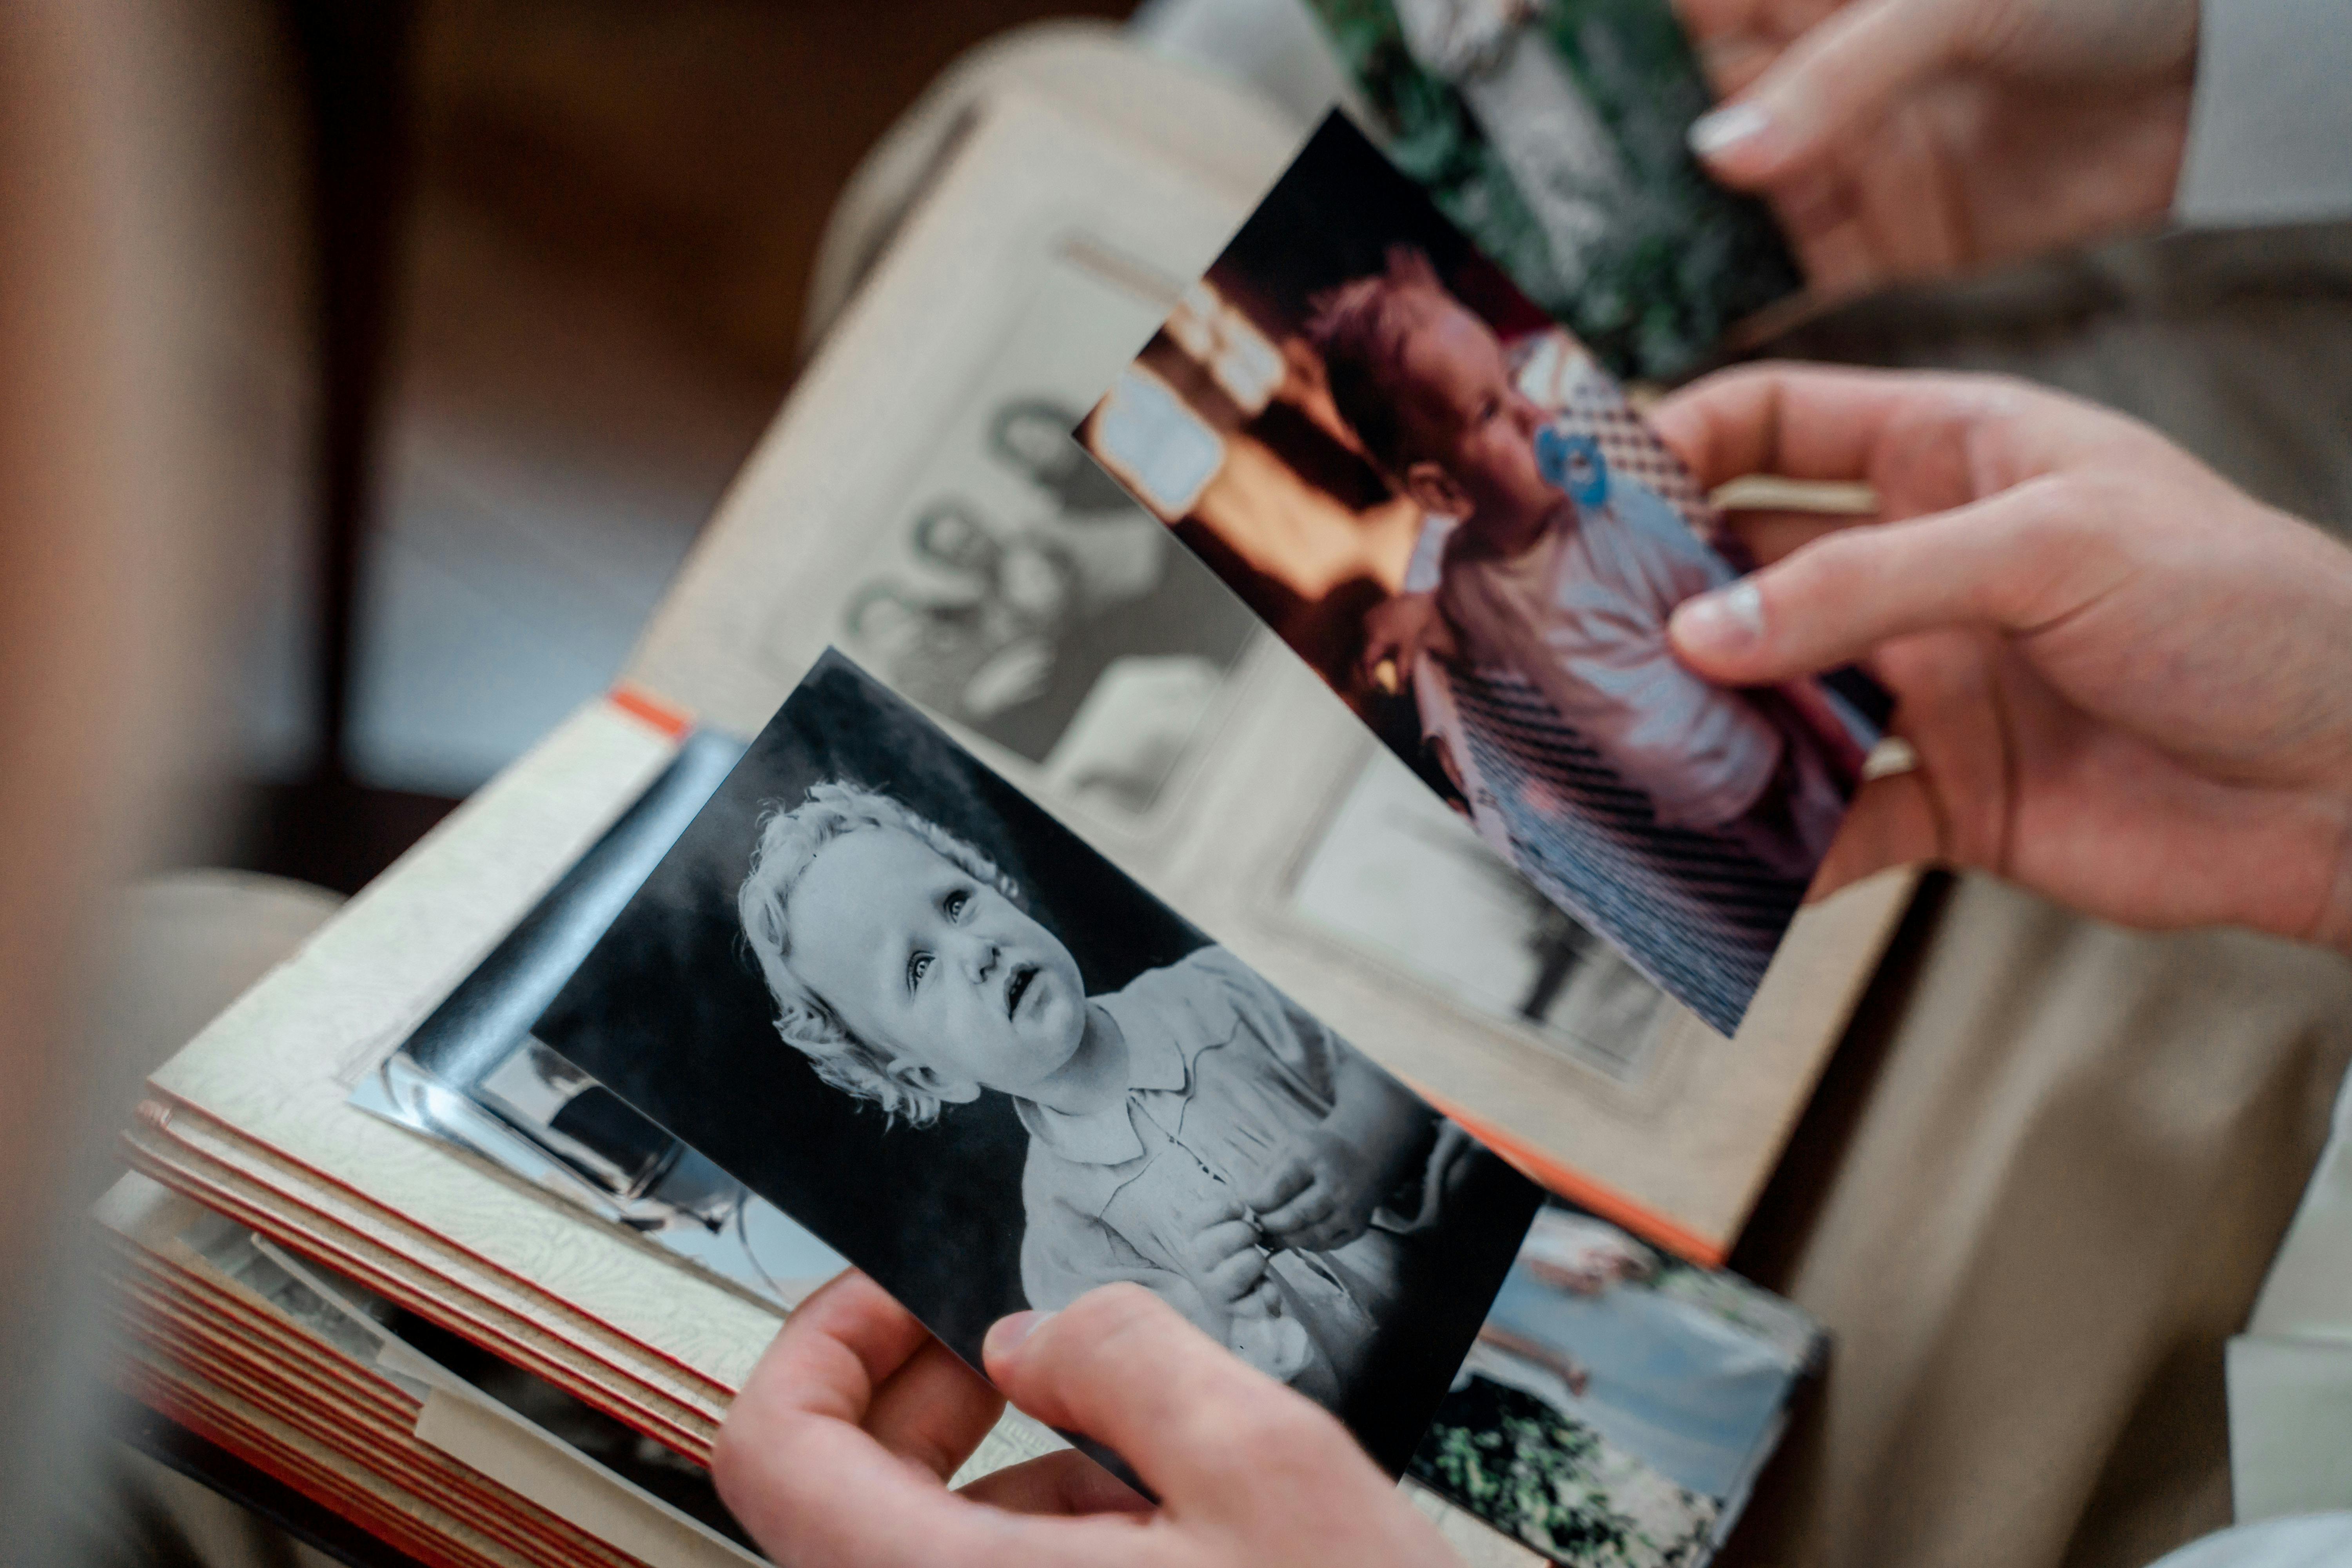 A woman leafing through a photo album | Source: Pexels